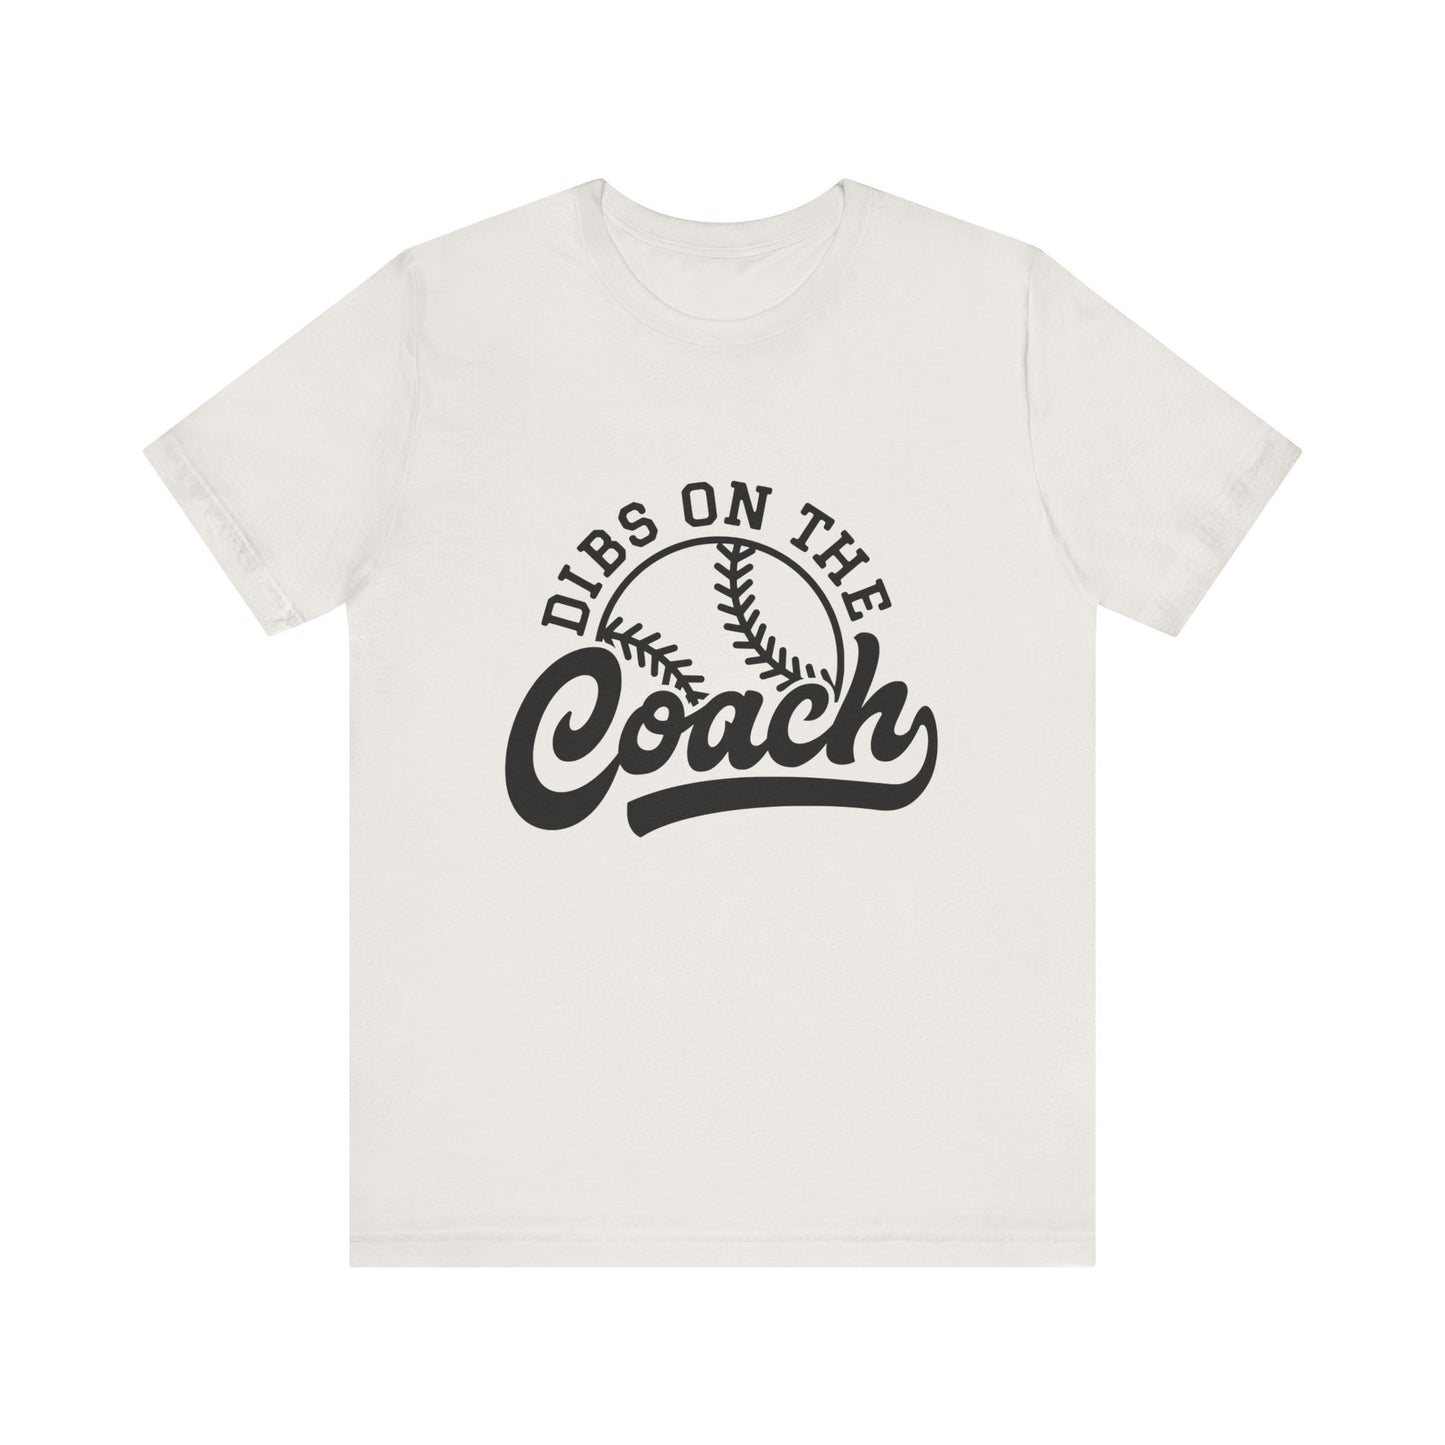 Dibs on the coach Women's Short Sleeve Shirt Baseball Softball Tball Coach